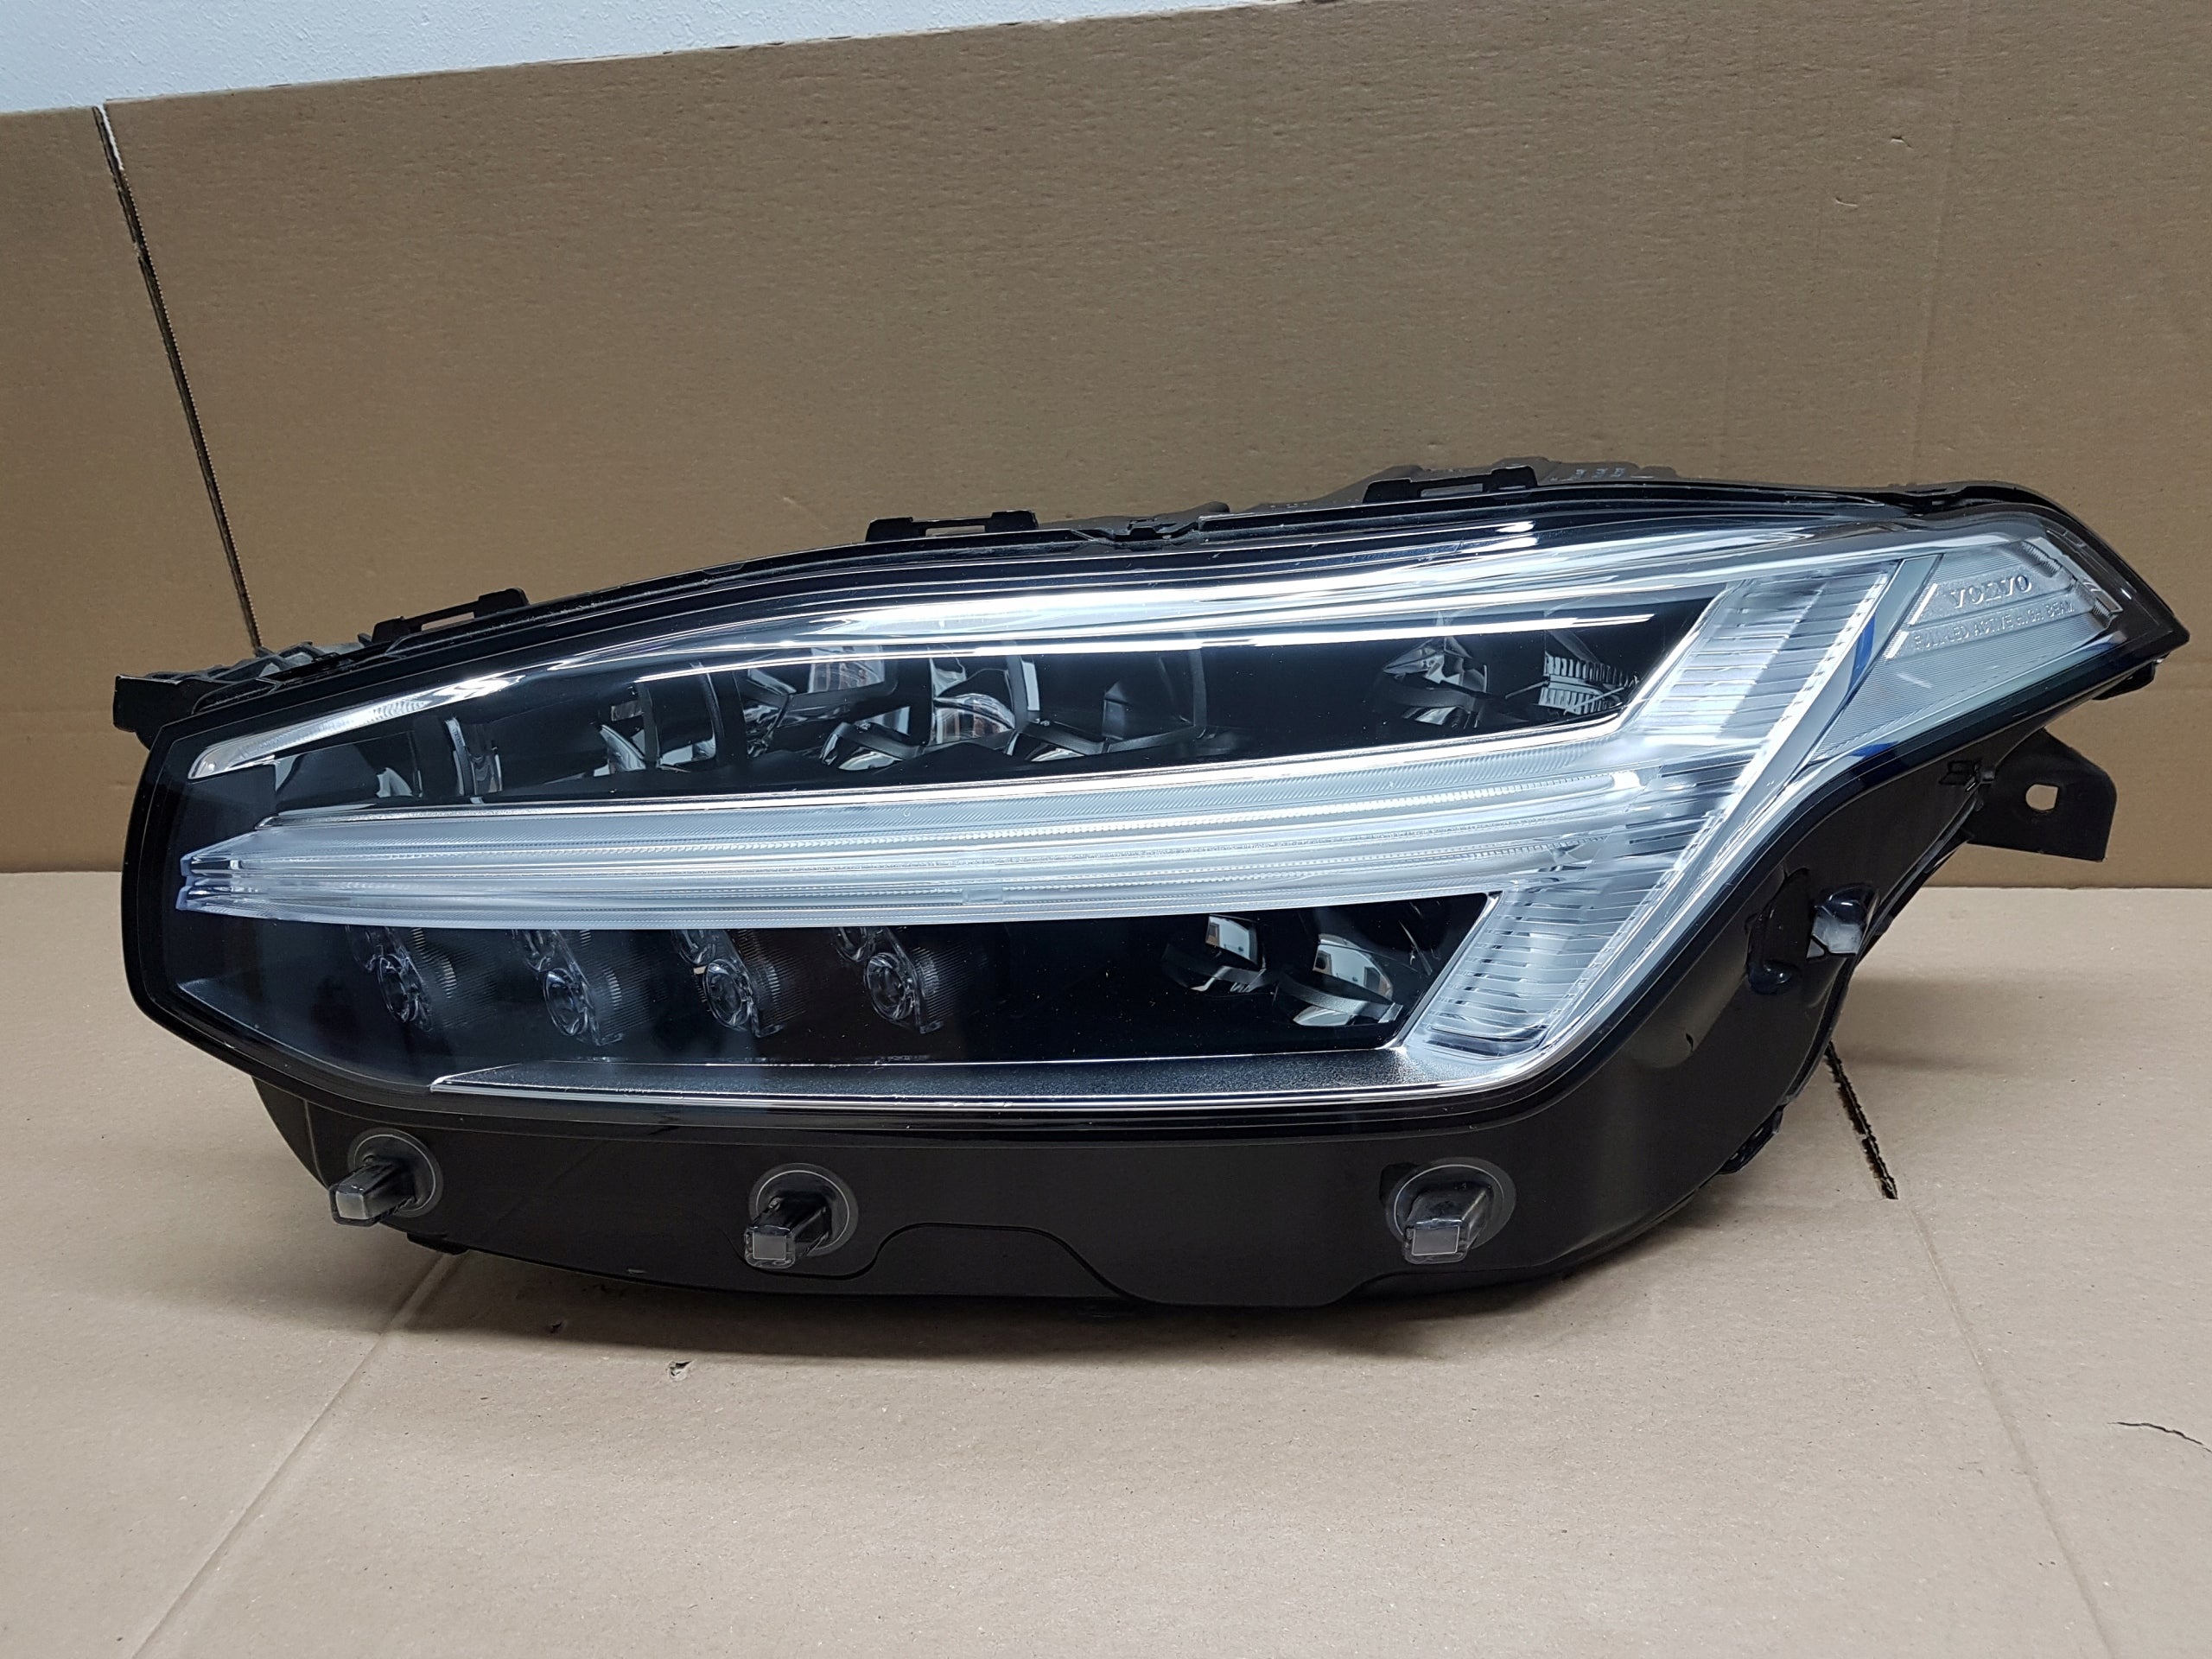  Frontscheinwerfer Volvo XC90 Led Links Original Scheinwerfer Headlight product image